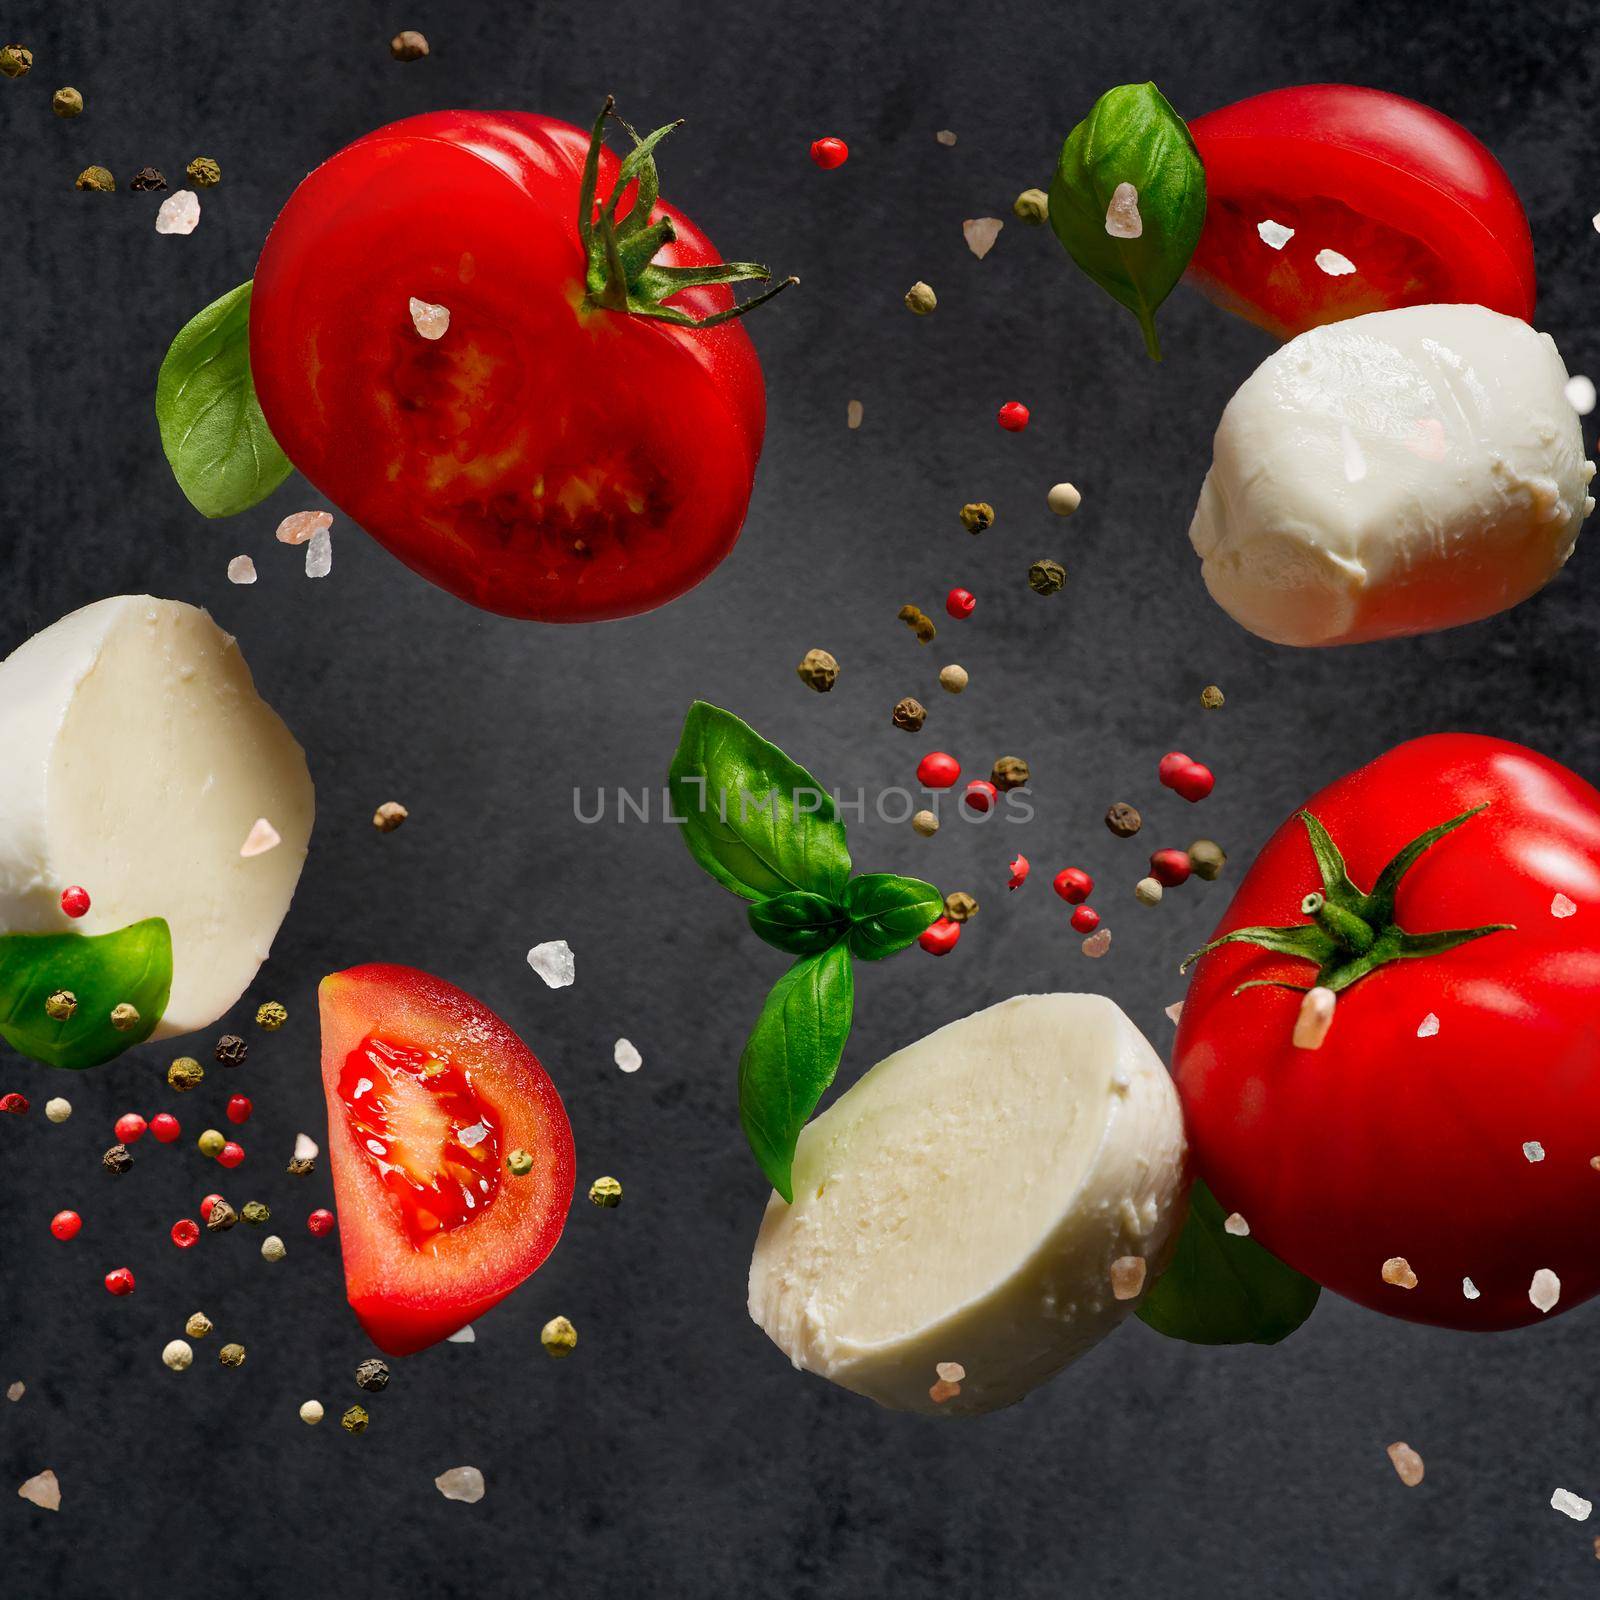 Falling caprese salad ingredients on dark background. Italian appetizer by PhotoTime